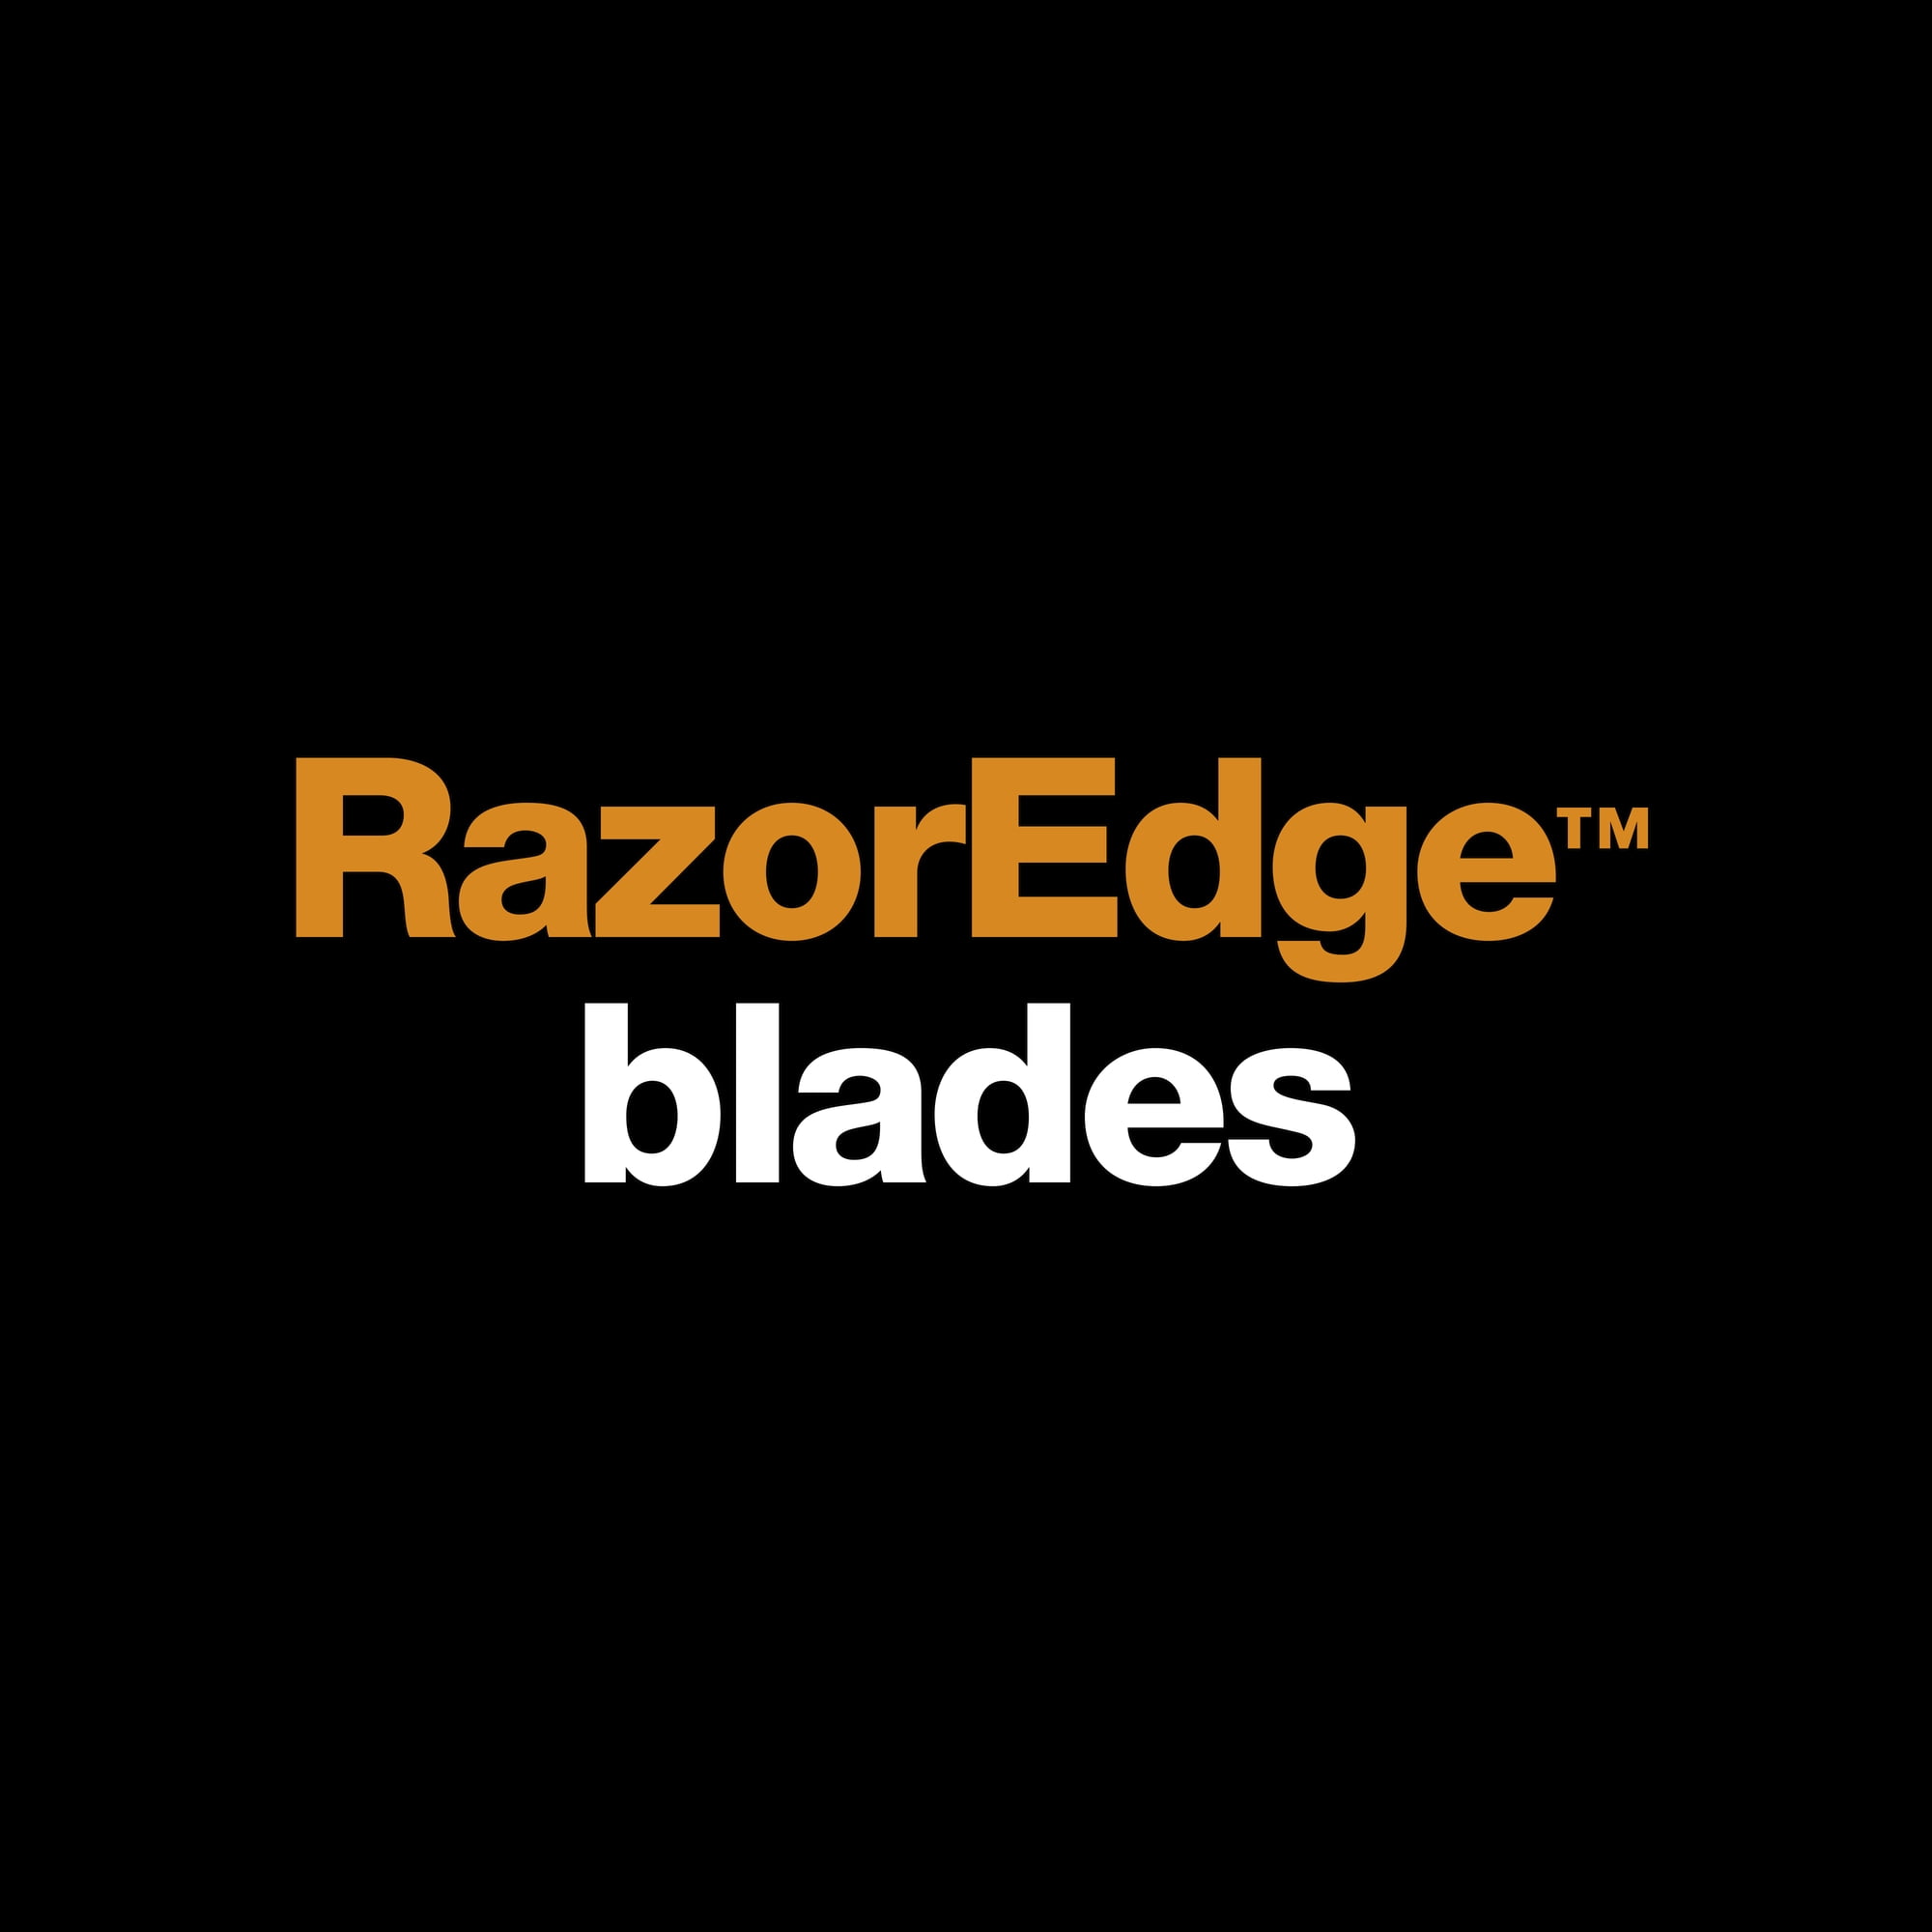 Fiskars Razor Edge Fabric Shears - 8 - The Online Drugstore ©